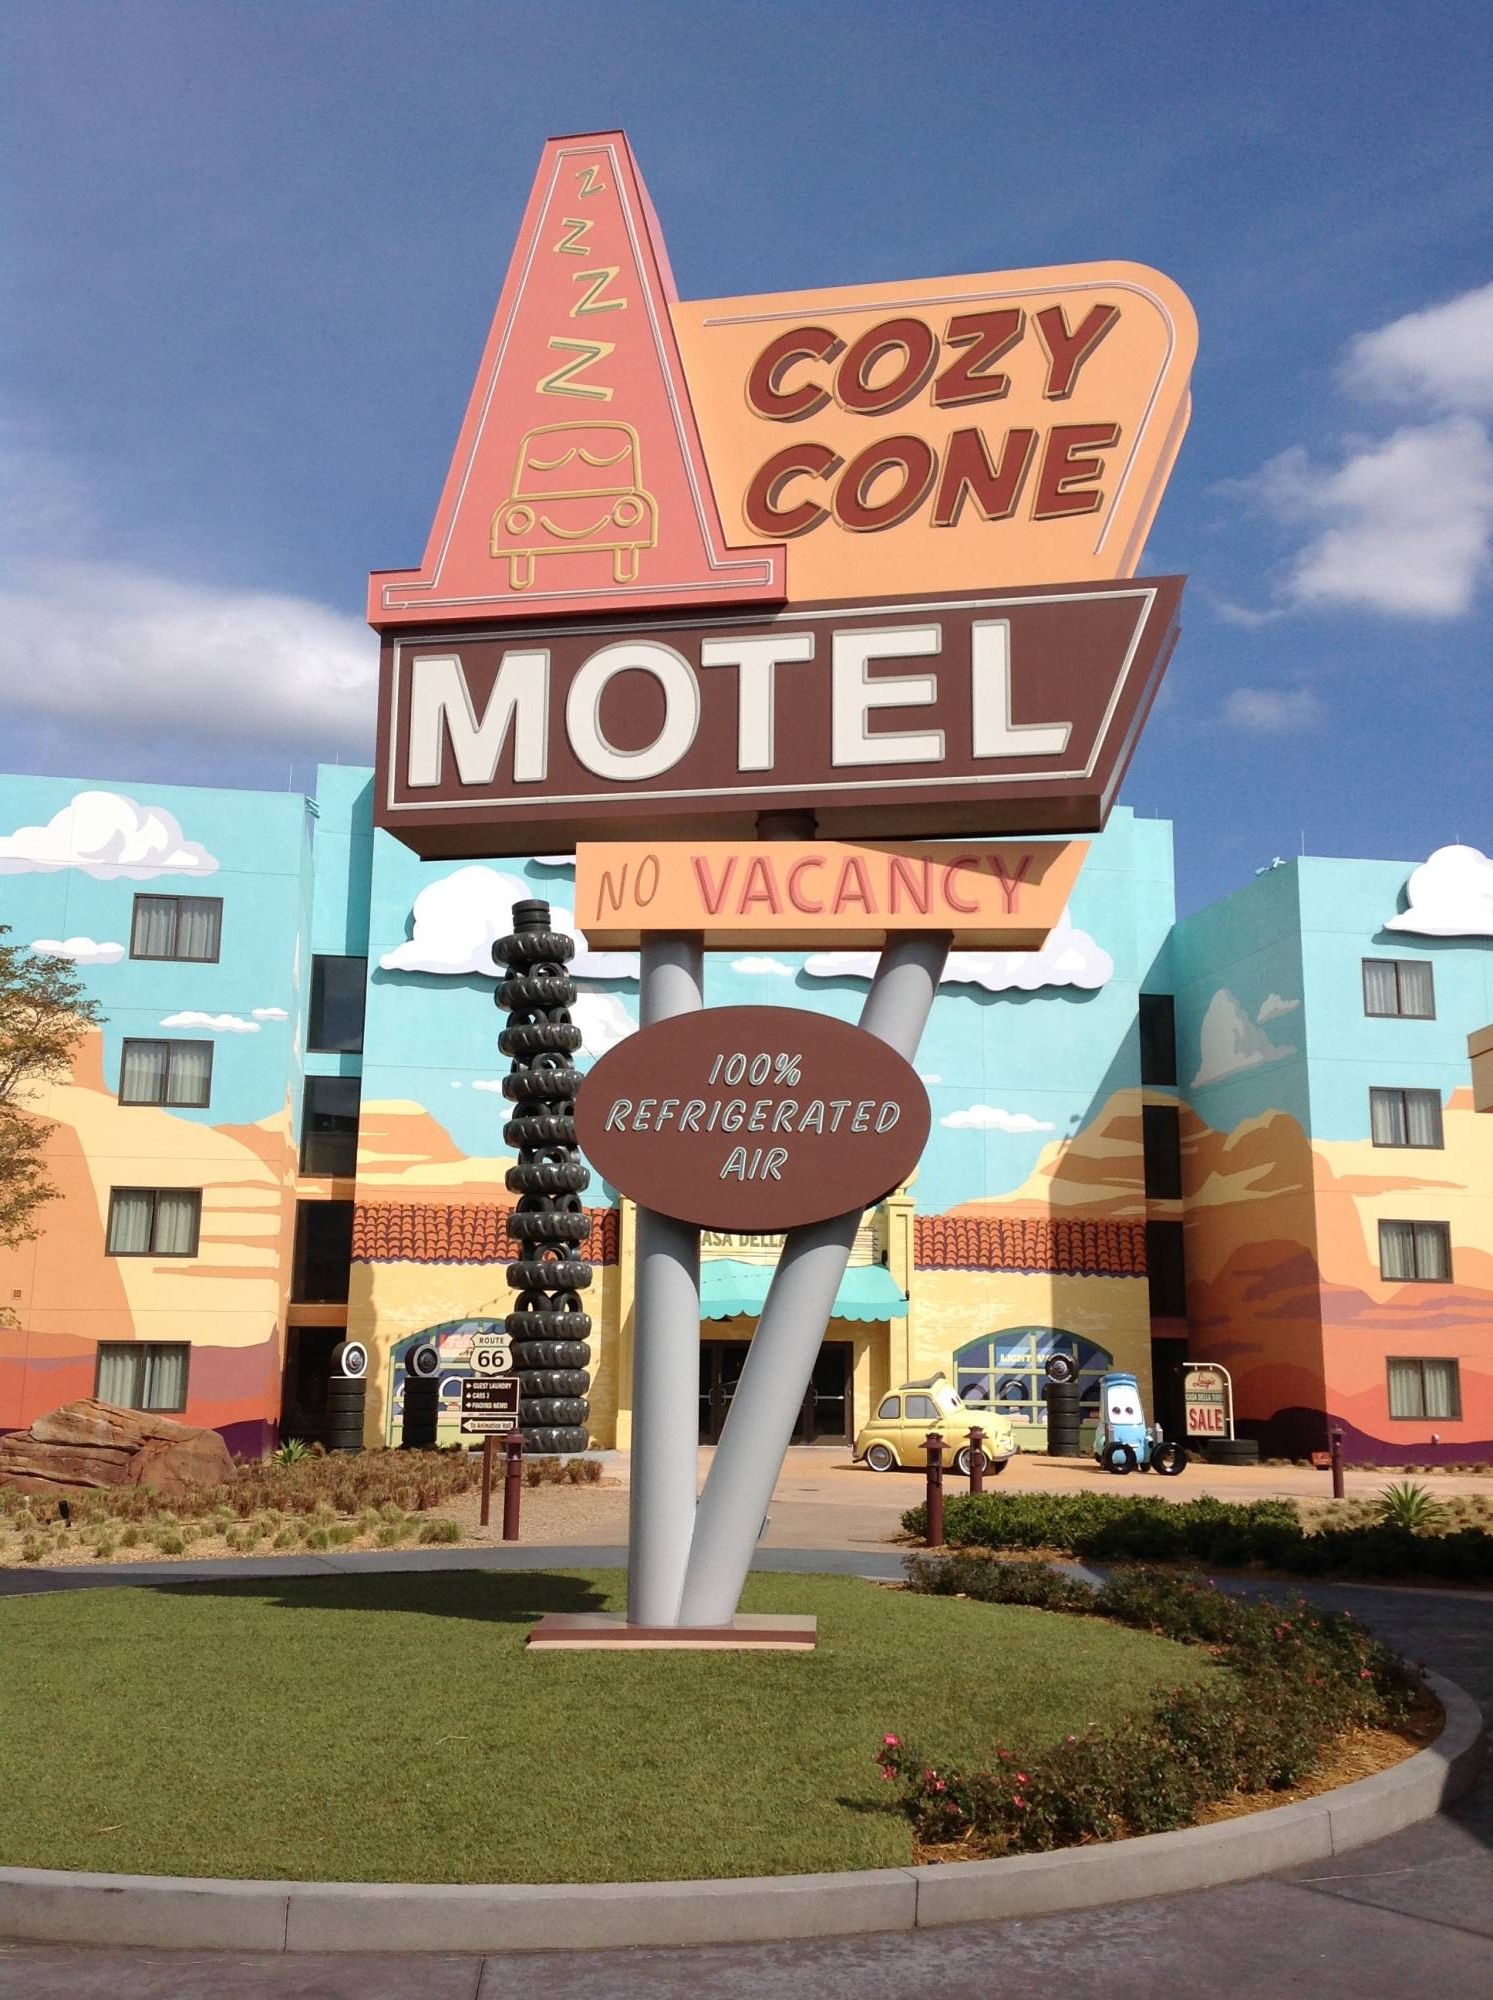 Cozy Cone Motel - Art of Animation